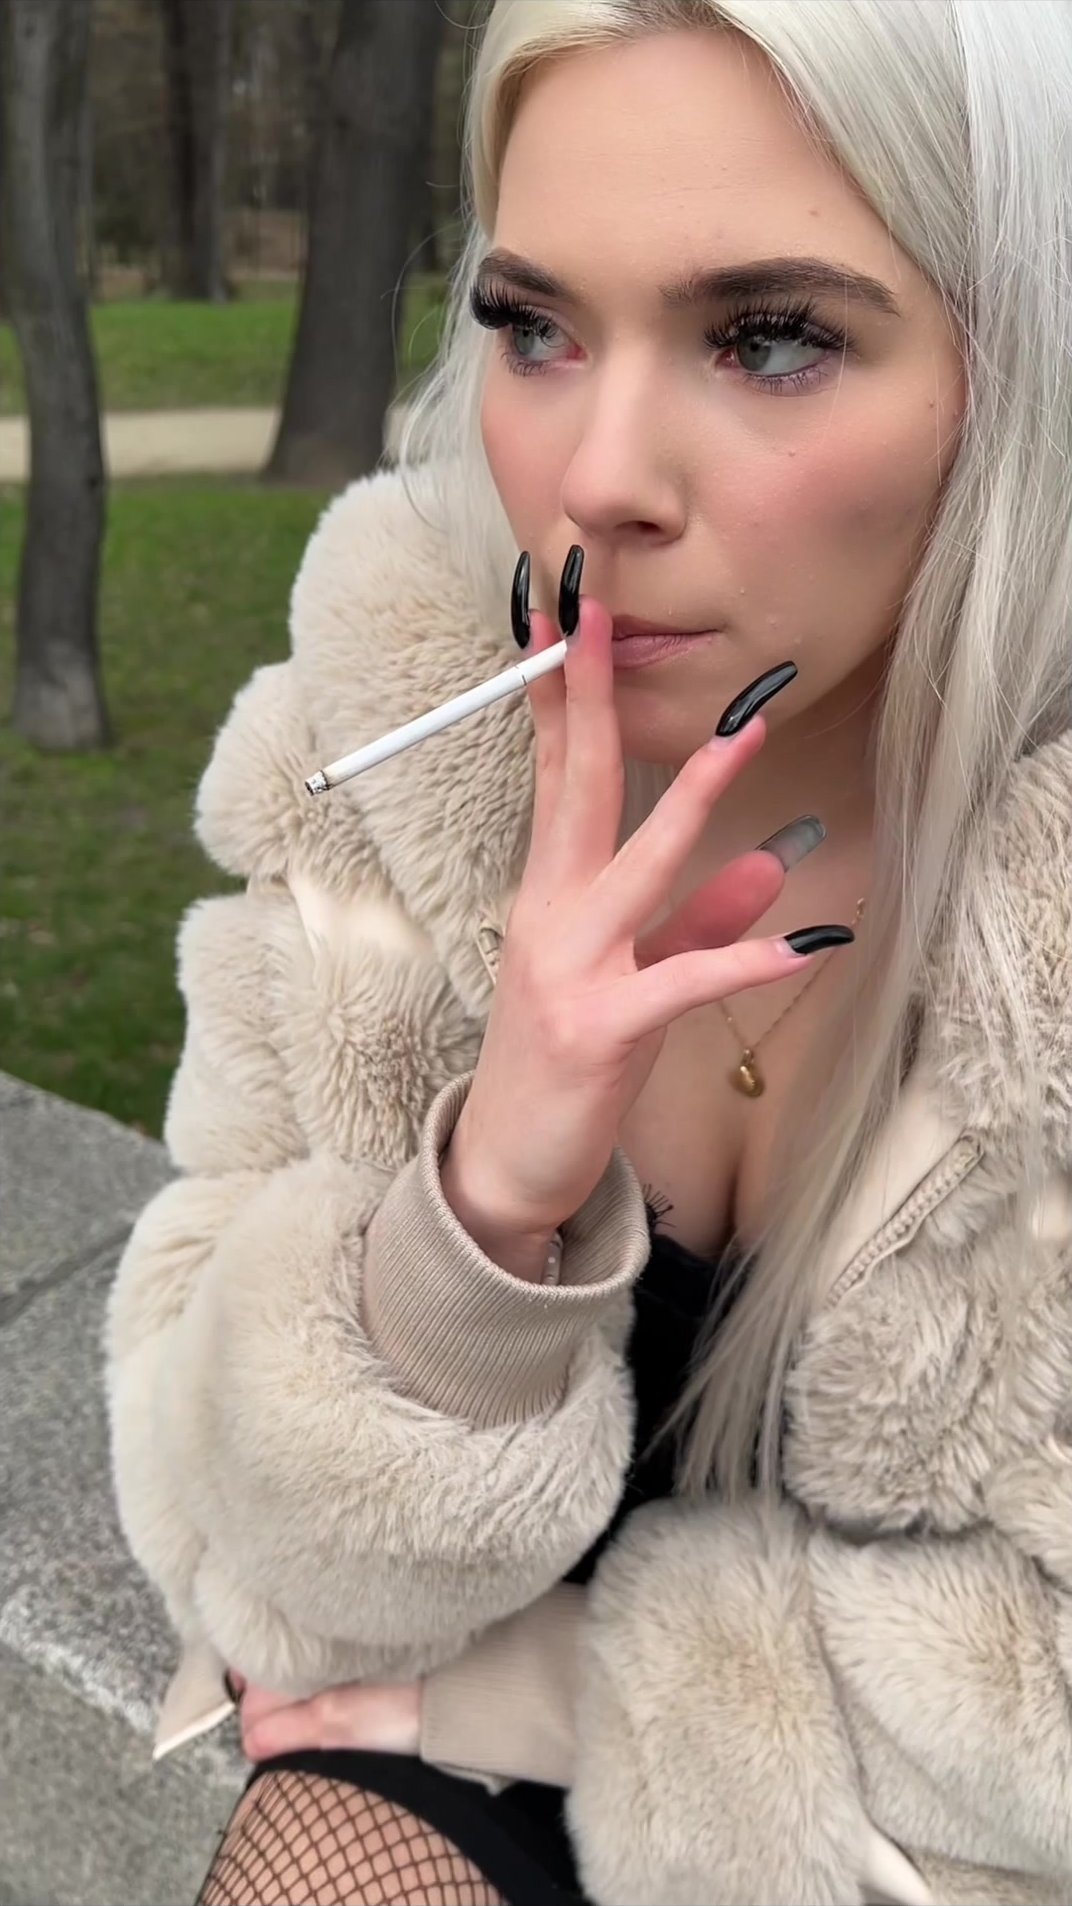 Smoking and spitting loogies - video 2